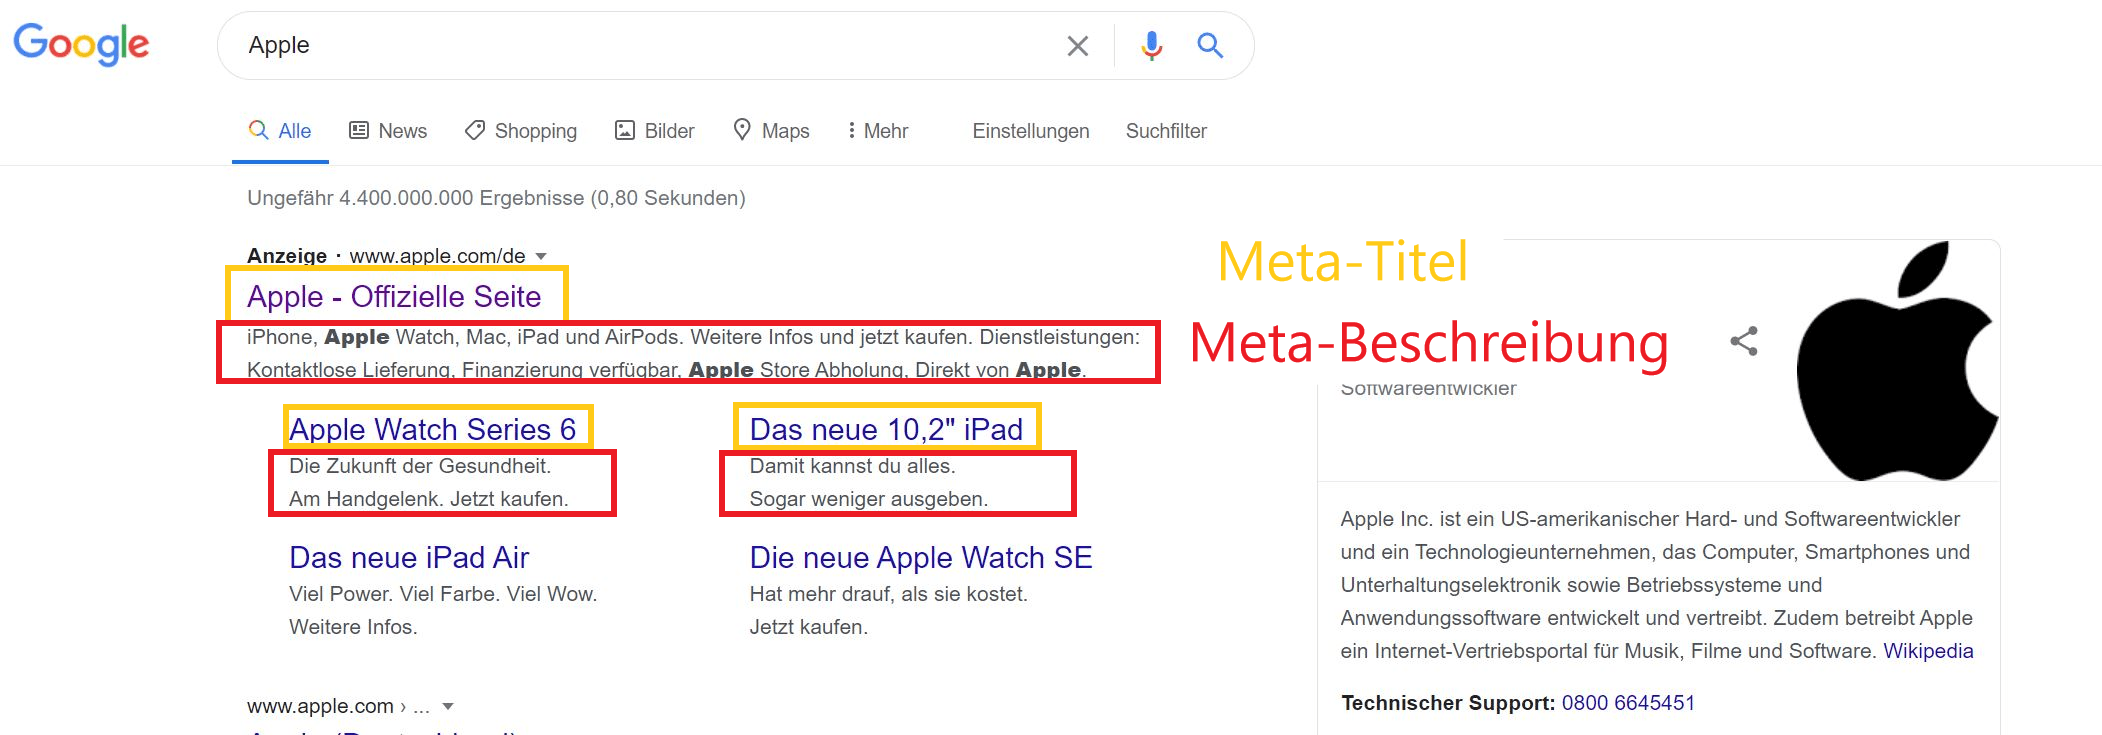 Meta Description und Meta title (SEO Checkliste)